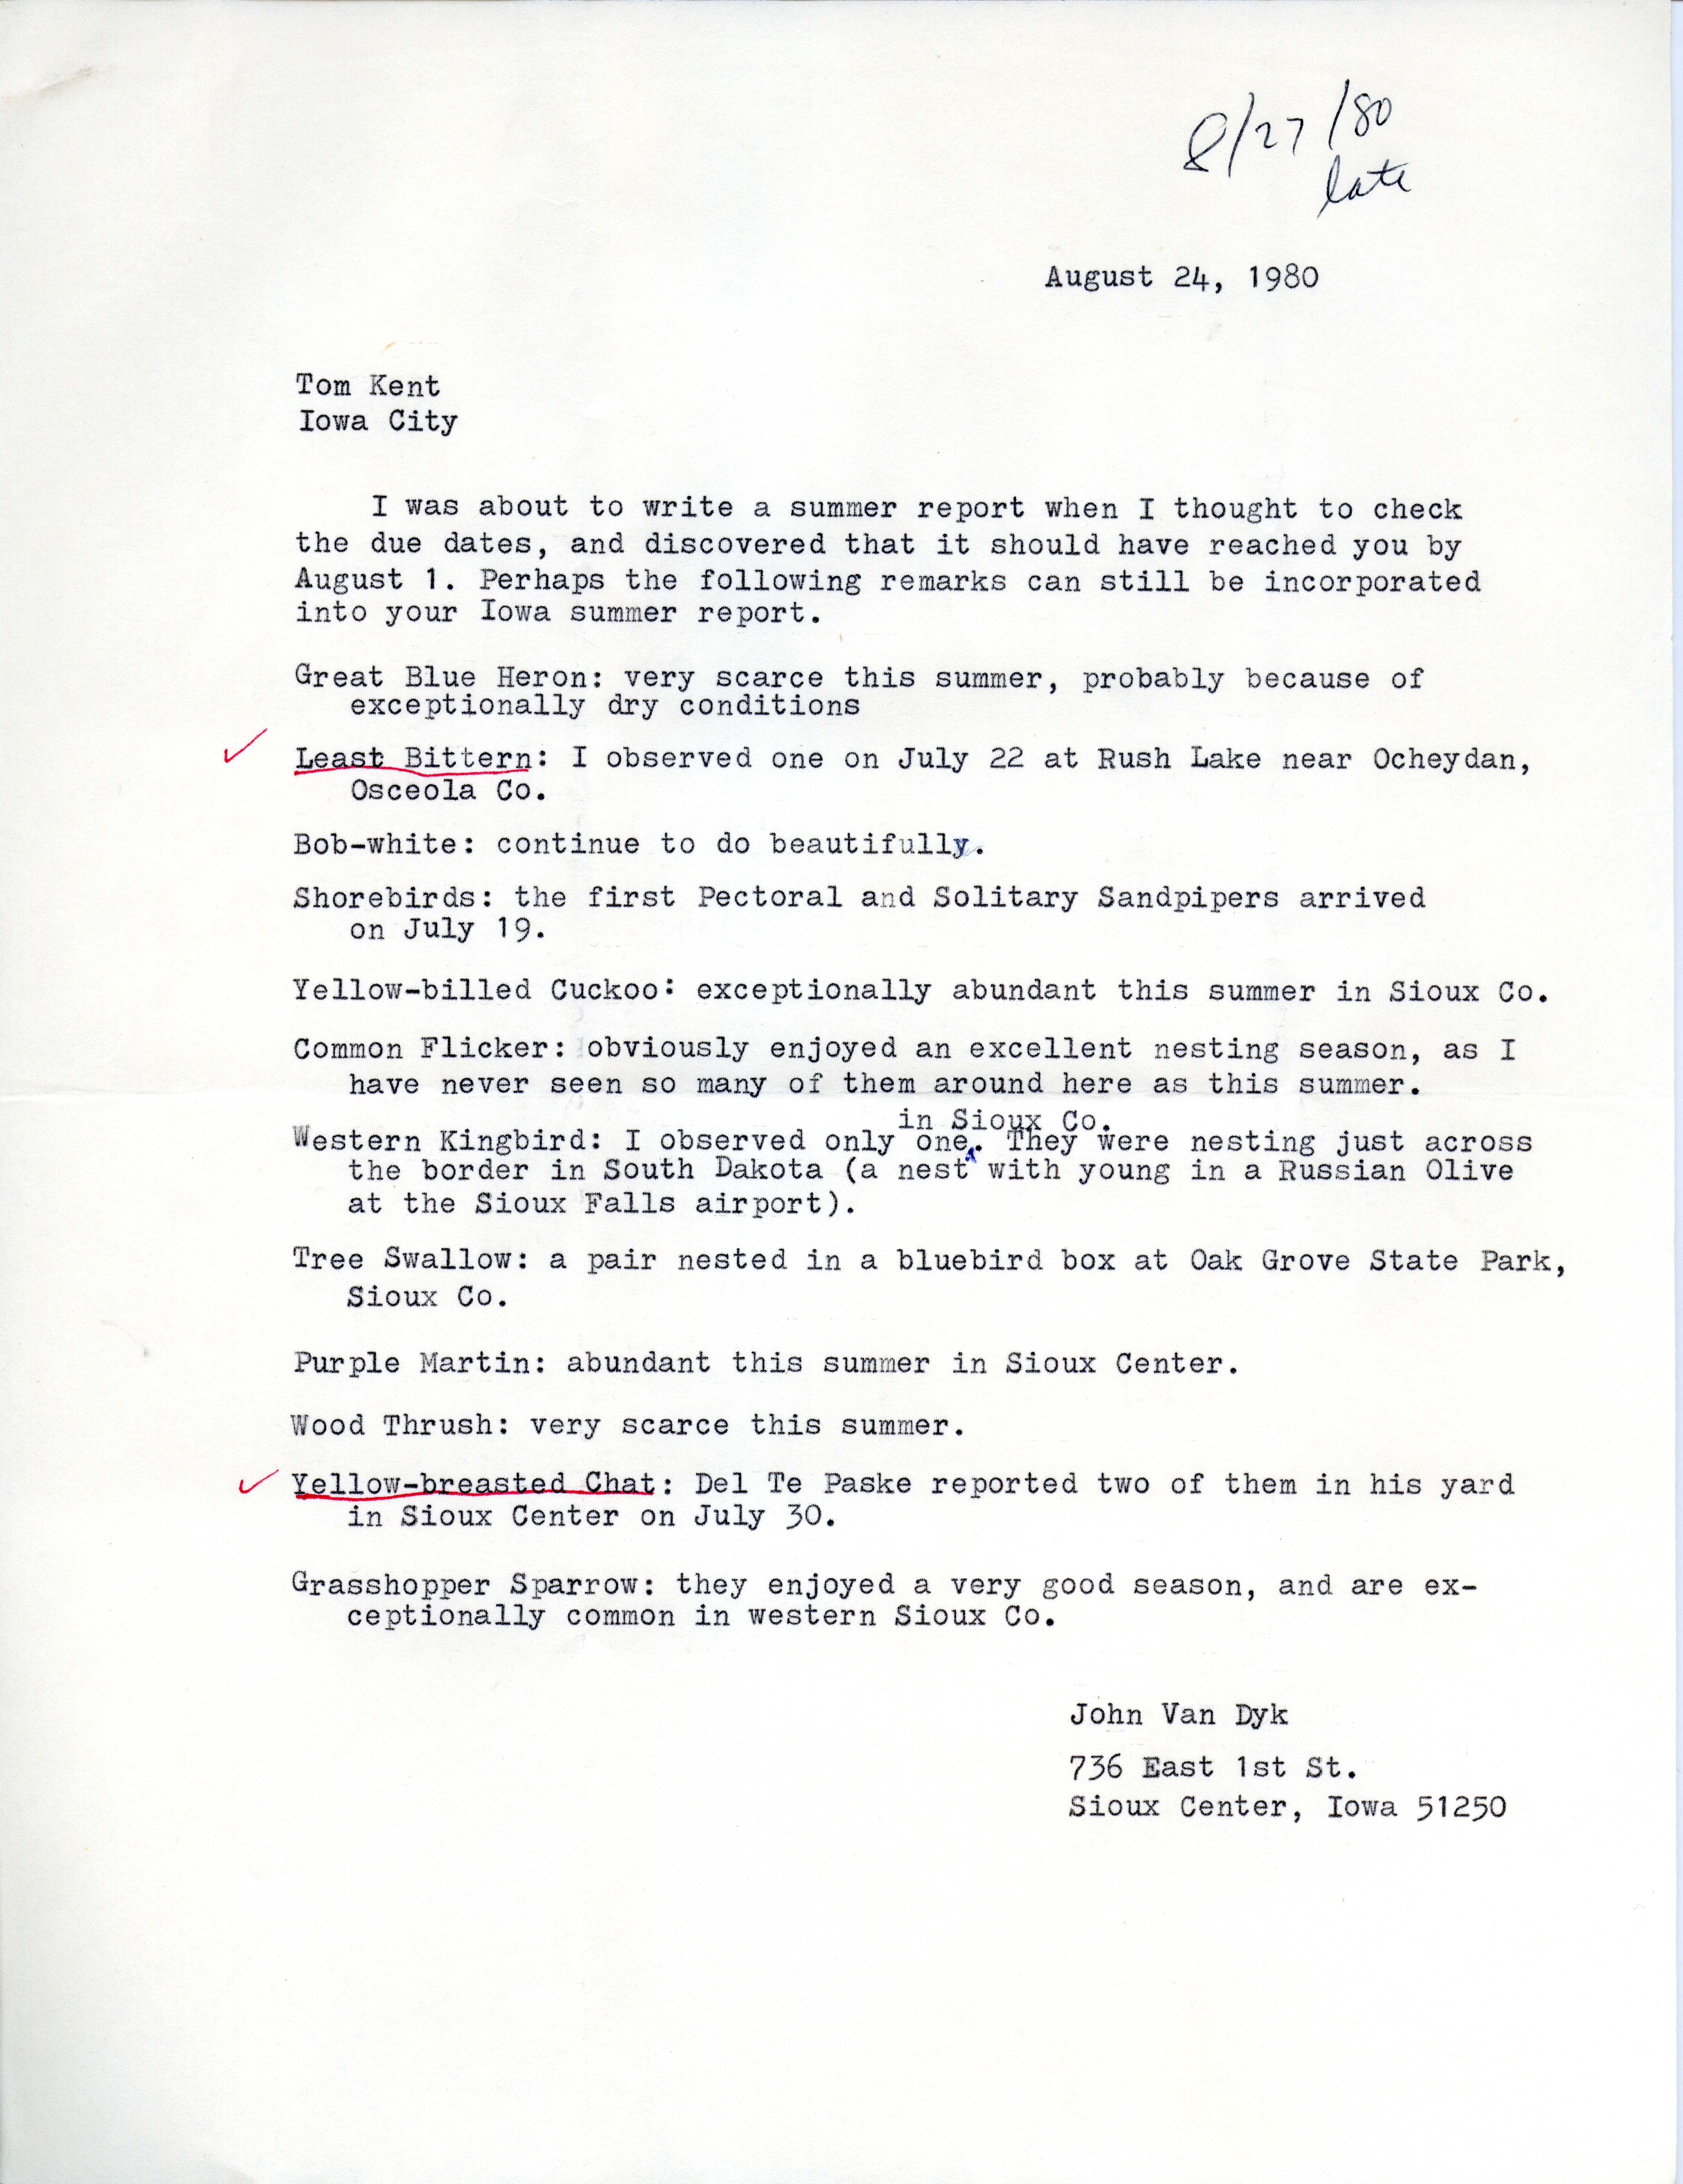 John Van Dyk letter to Thomas H. Kent regarding bird sightings, August 24, 1980